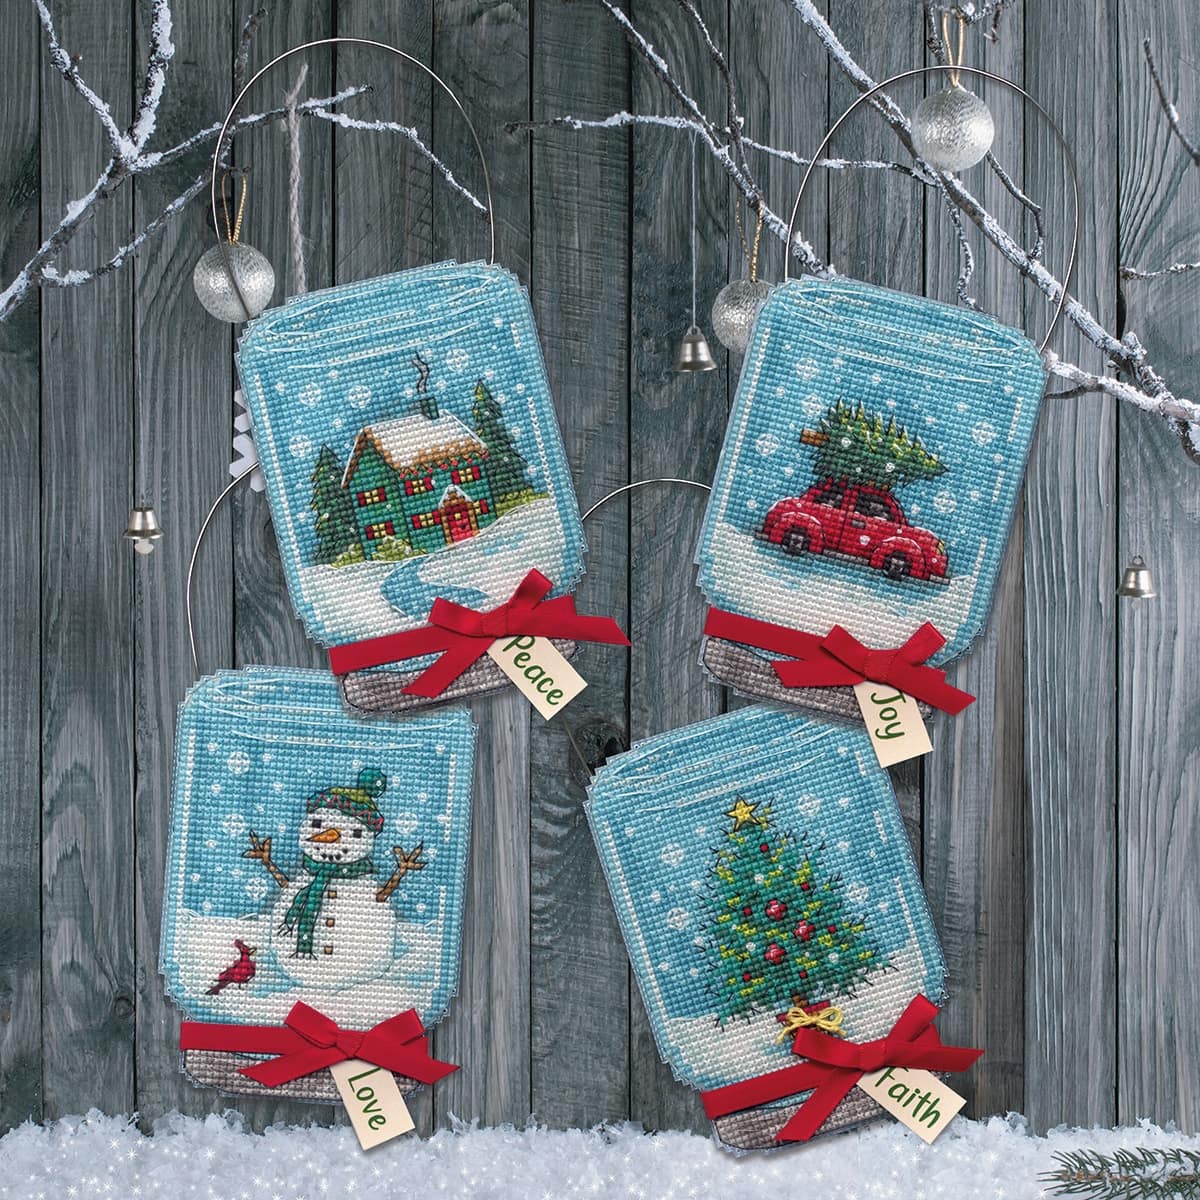 Christmas Jar Ornaments Counted Cross Stitch Kit – Stitch 'N Frame